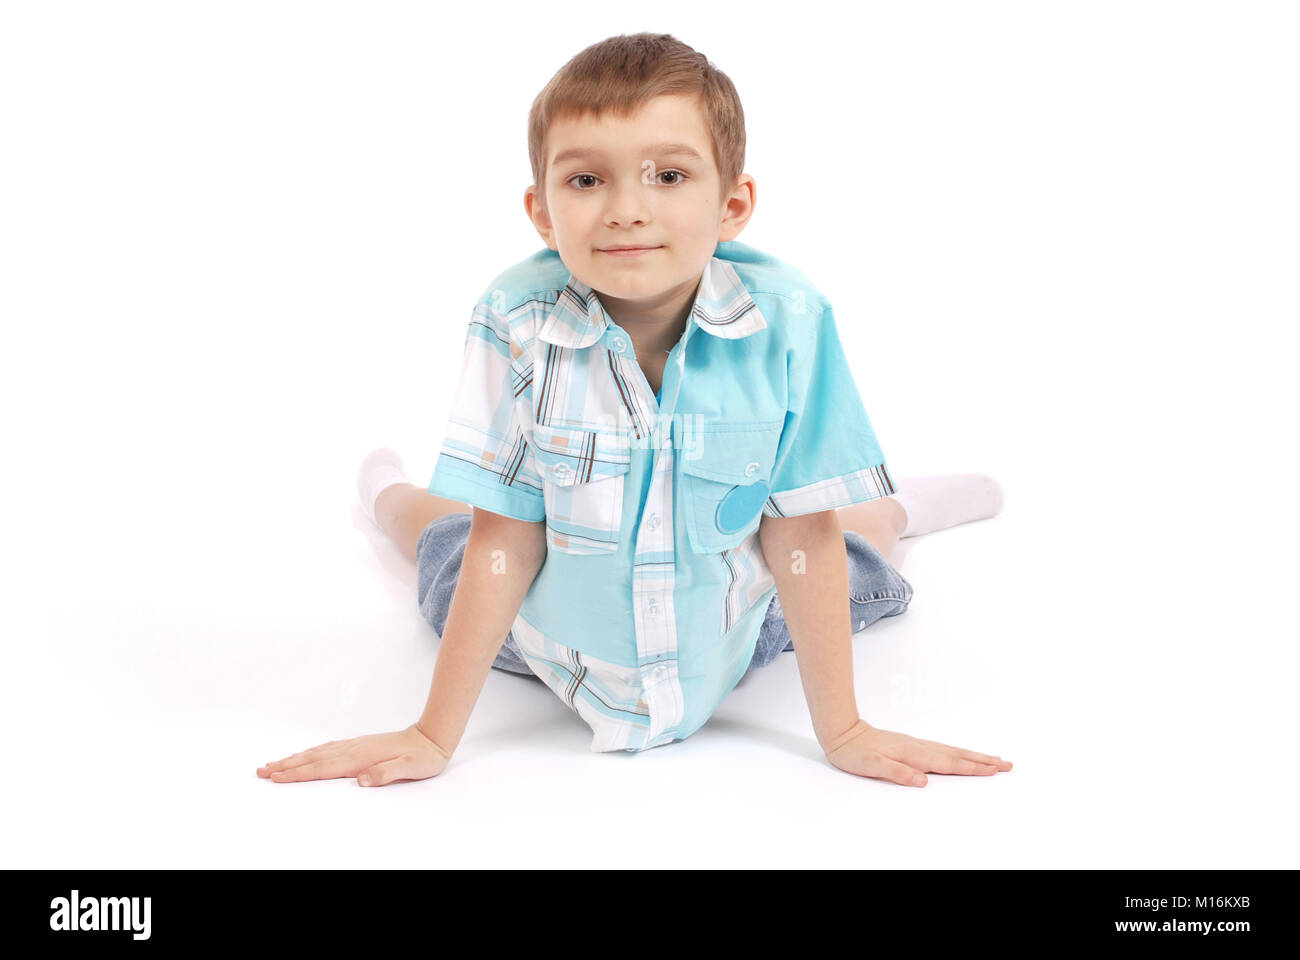 The boy poses, isolated on white background Stock Photo